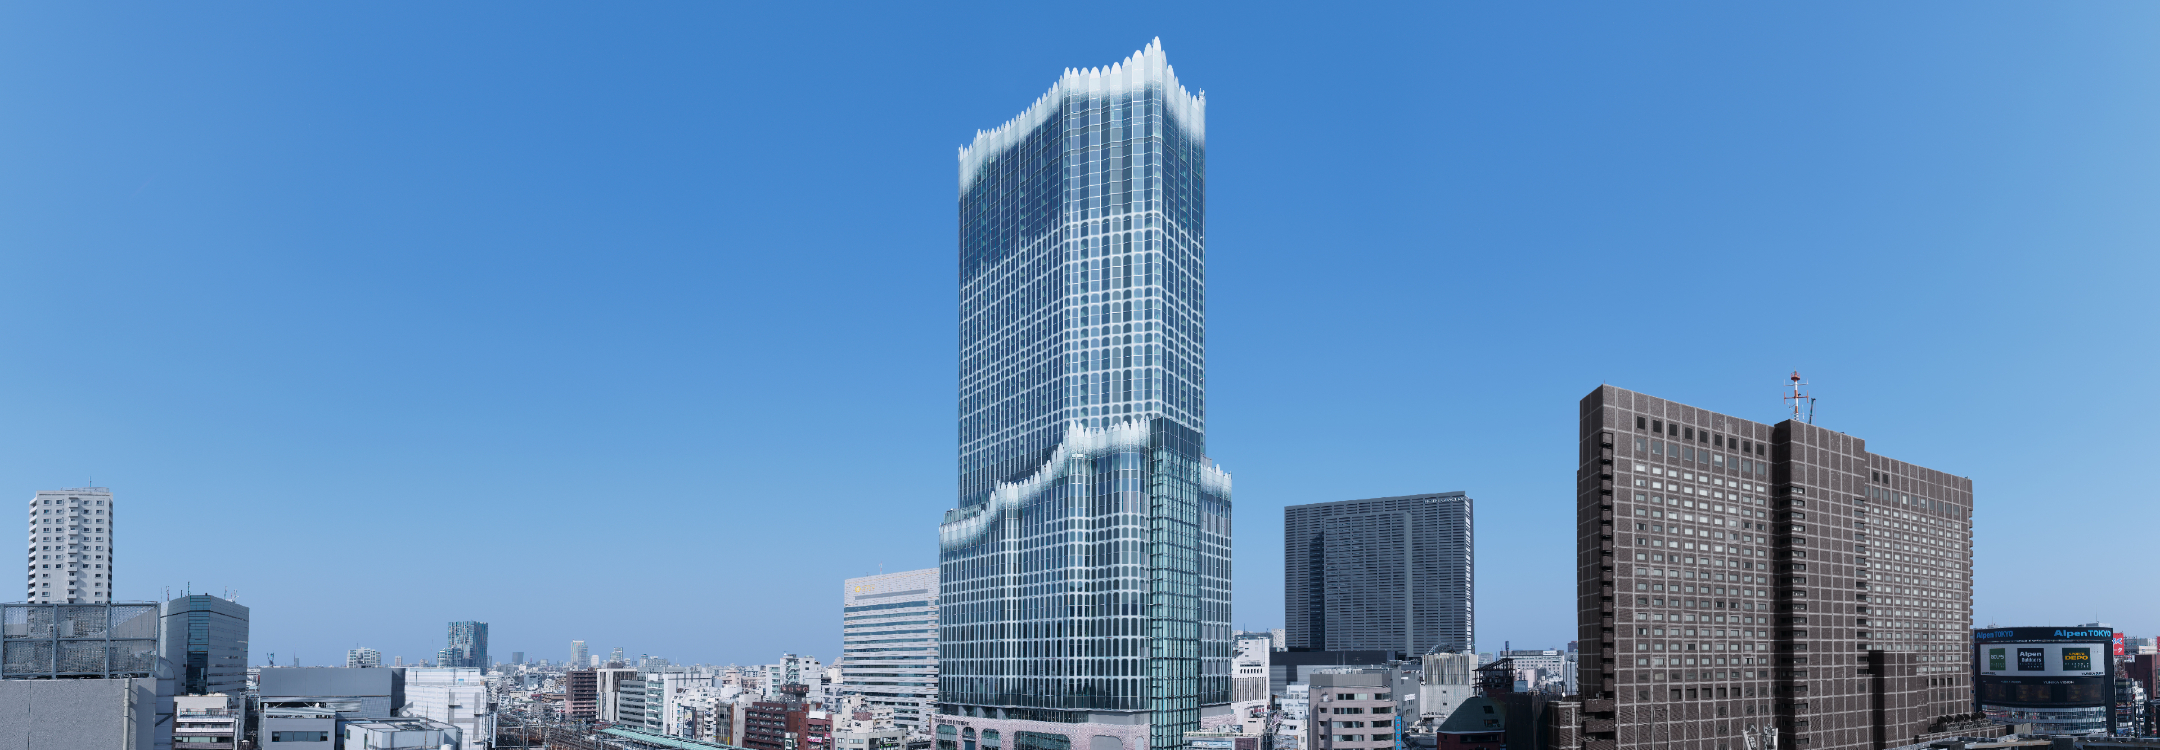 TOKYU KABUKICHO TOWER